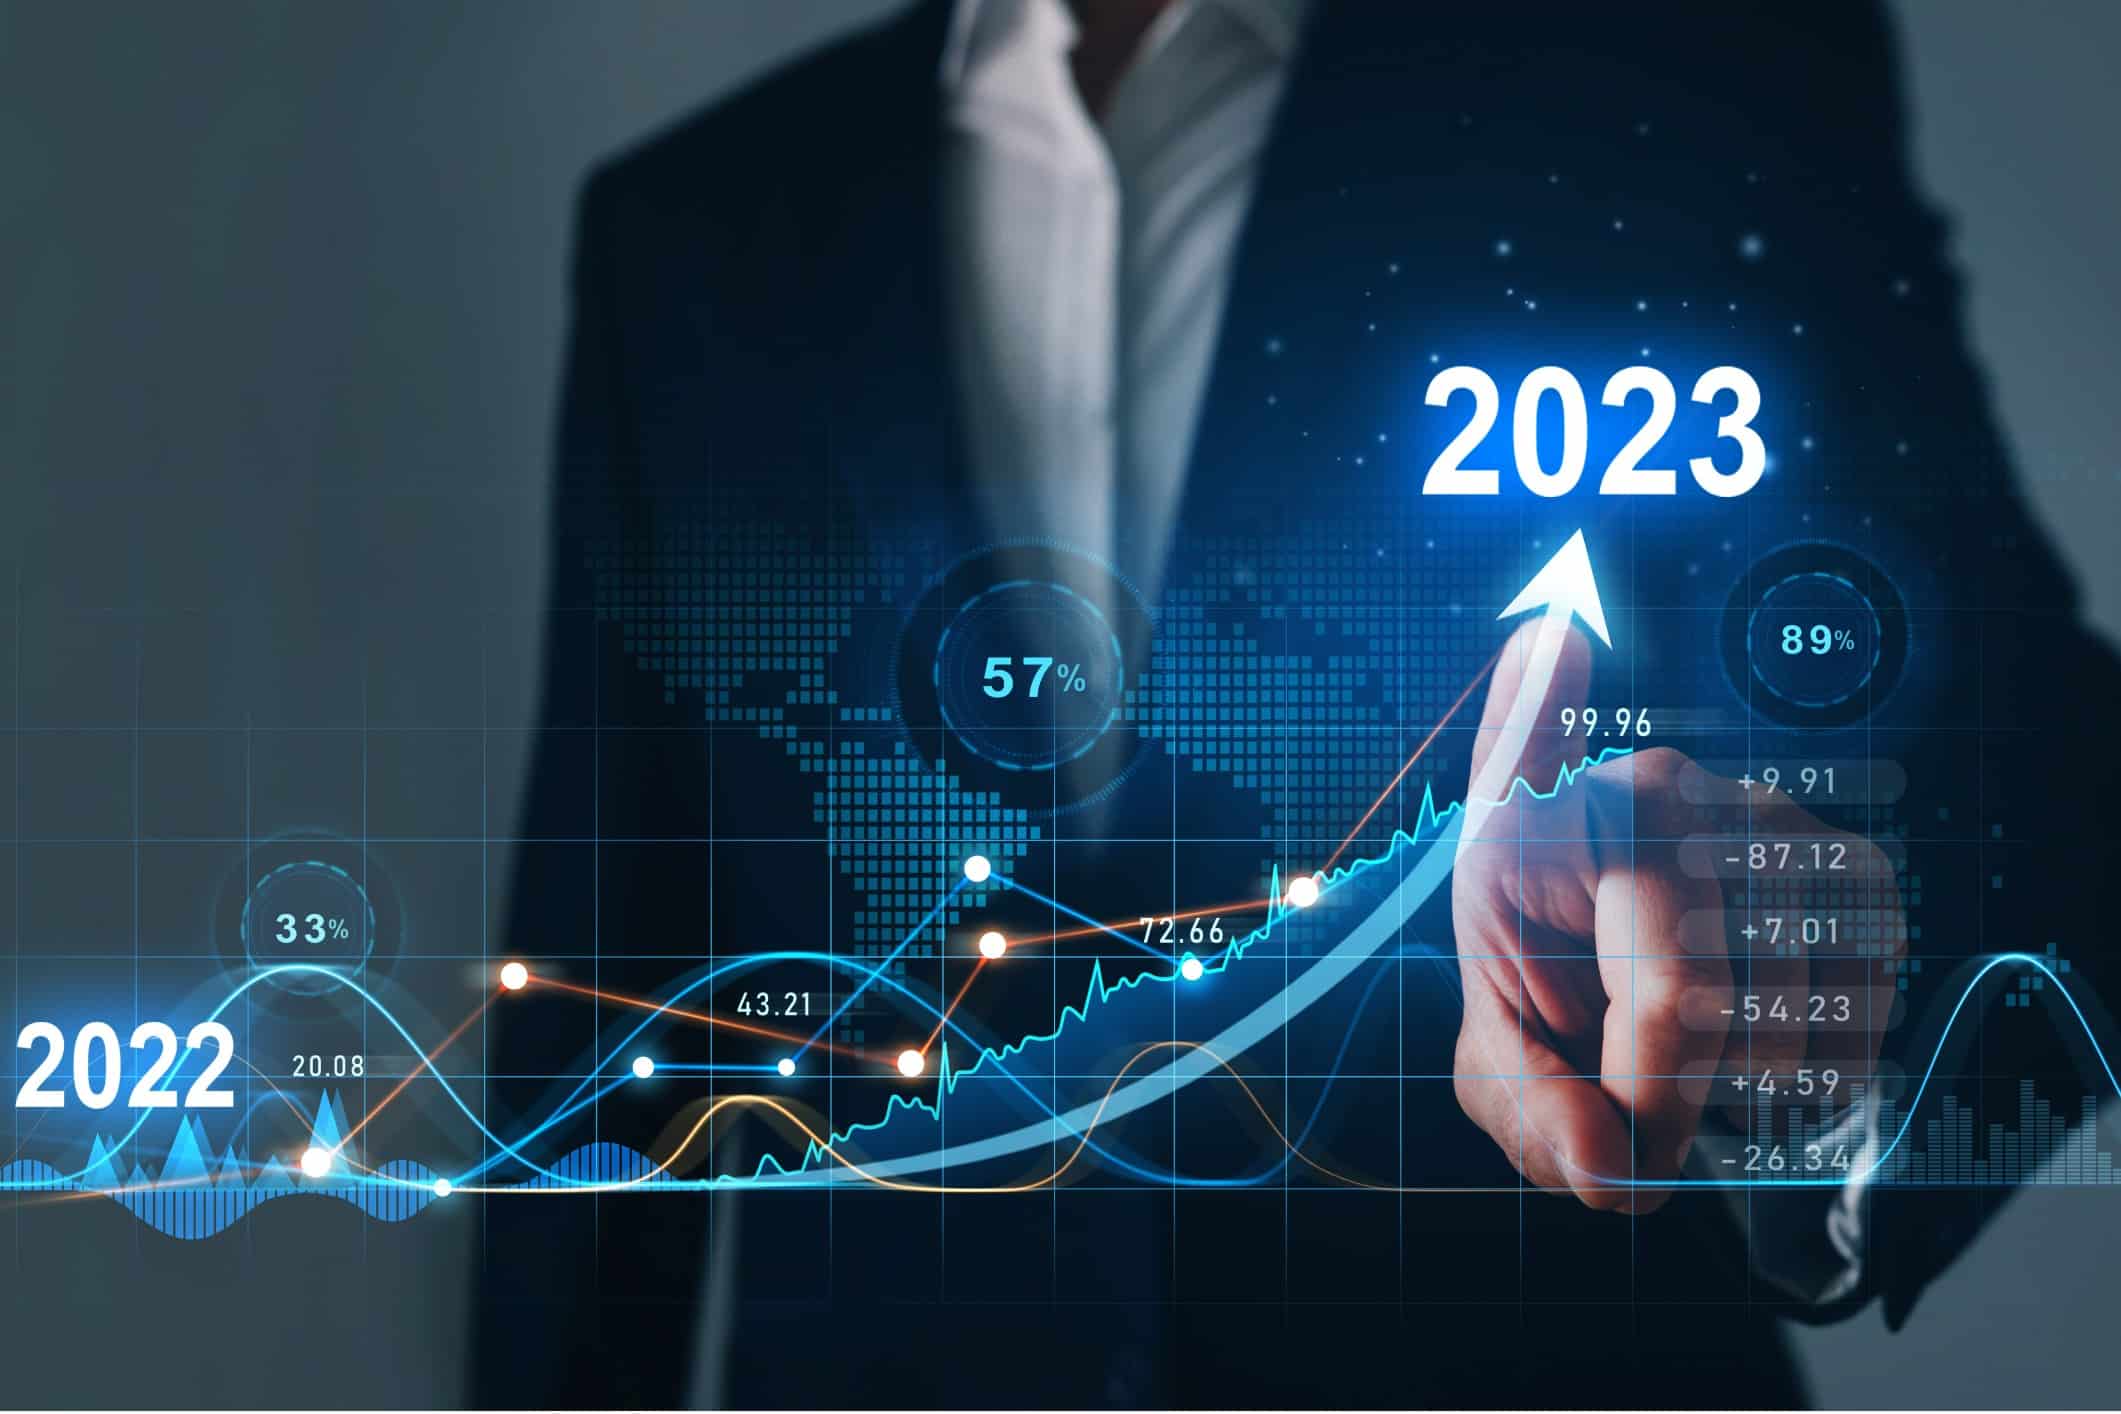 businessman draws increase arrow graph corporate future growth year 2022 to 2023 planning.jpg s1024x1024wisk20ciJZns2NSDrbpUvpAcccrgcjyMYD0Z2qP bikJQ88gnQ